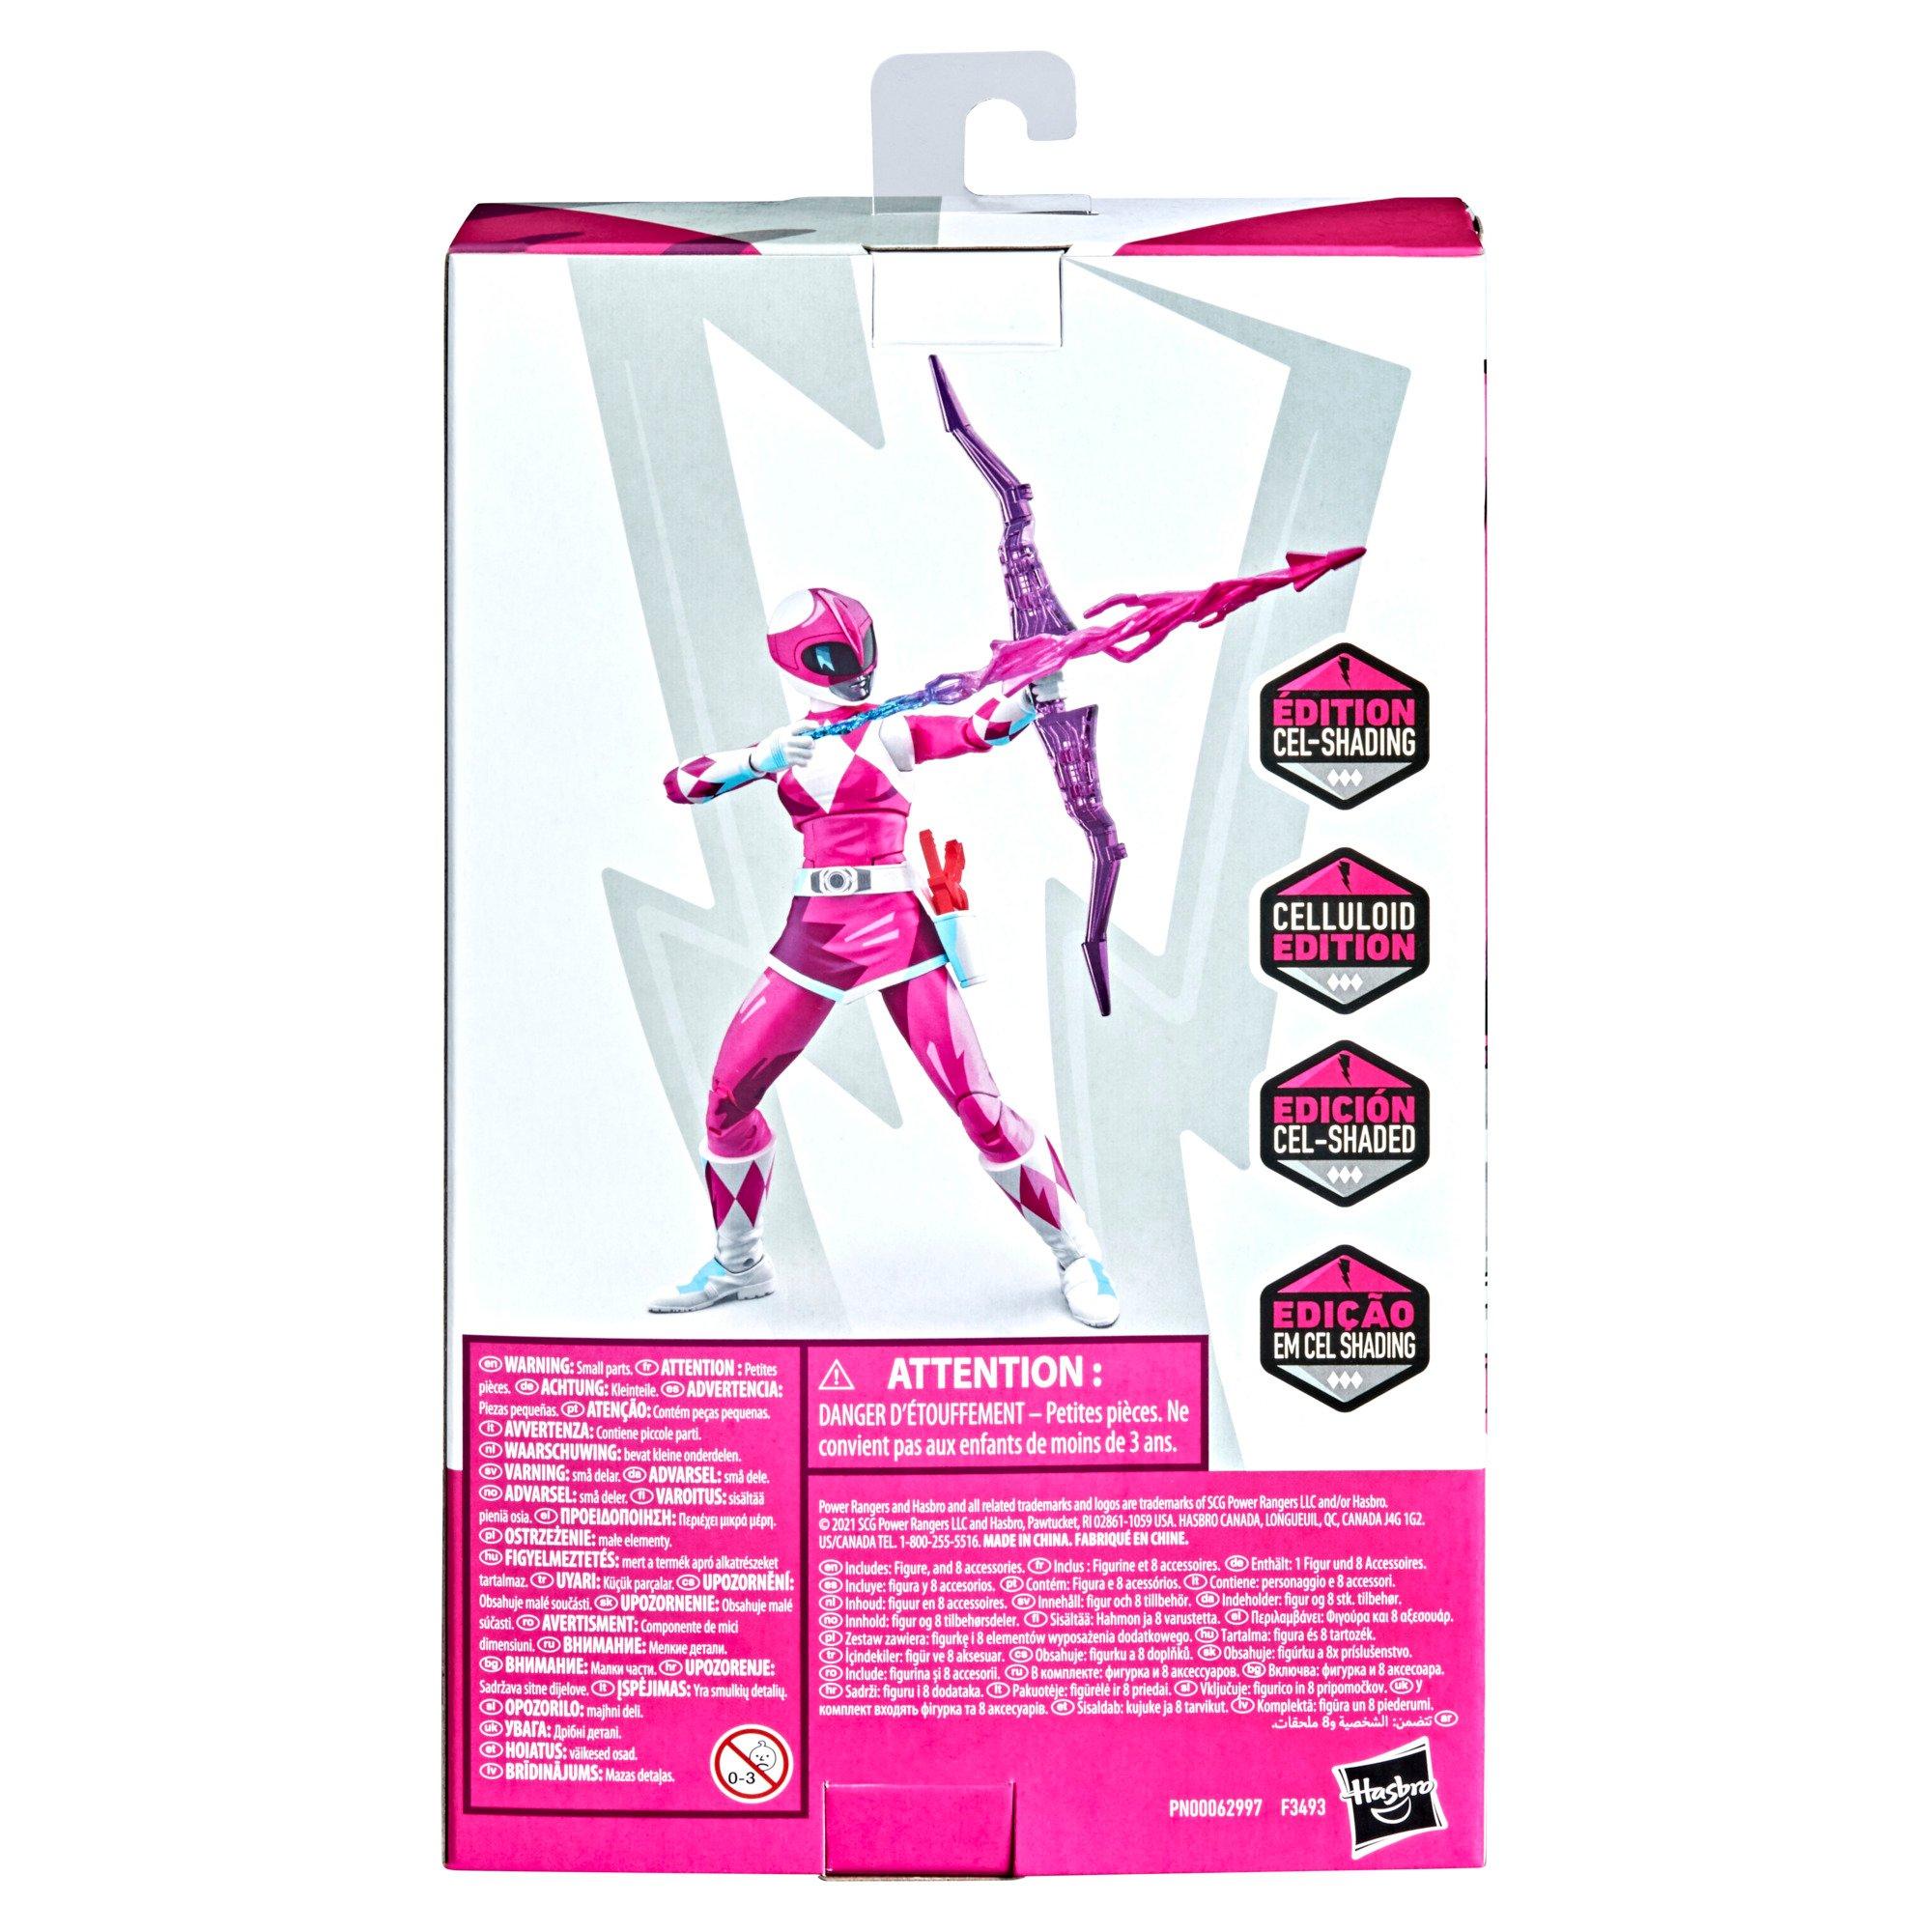 Hasbro Mighty Morphin Power Rangers Pink Ranger Lightning Collection Action Figure GameStop Exclusive